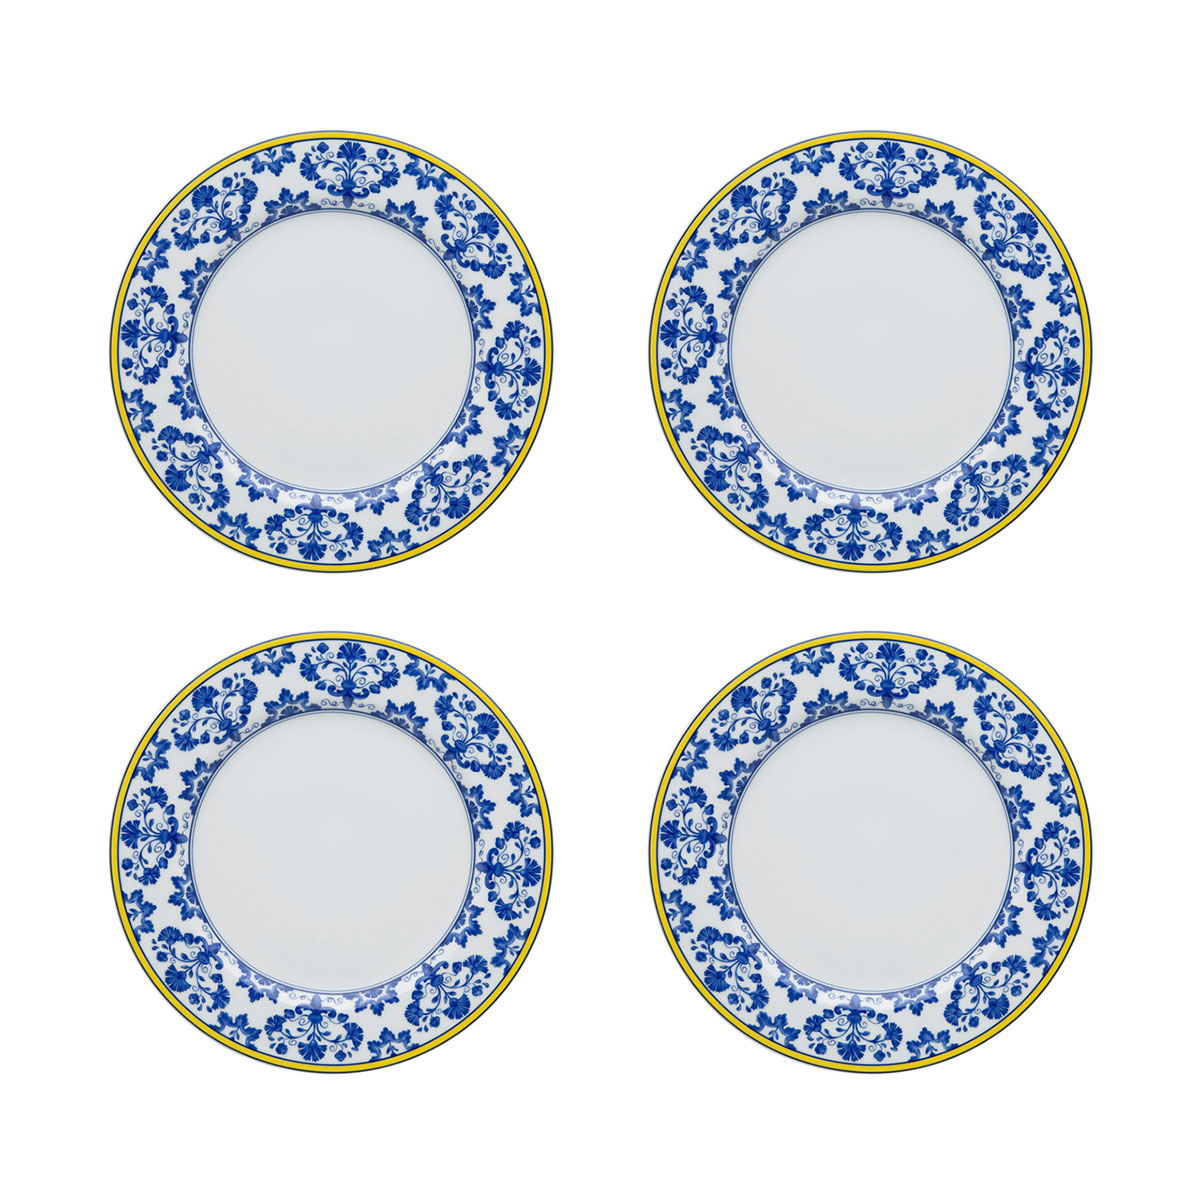 Vista Alegre Porcelain Castelo Branco Dinner Plate, Set of 4